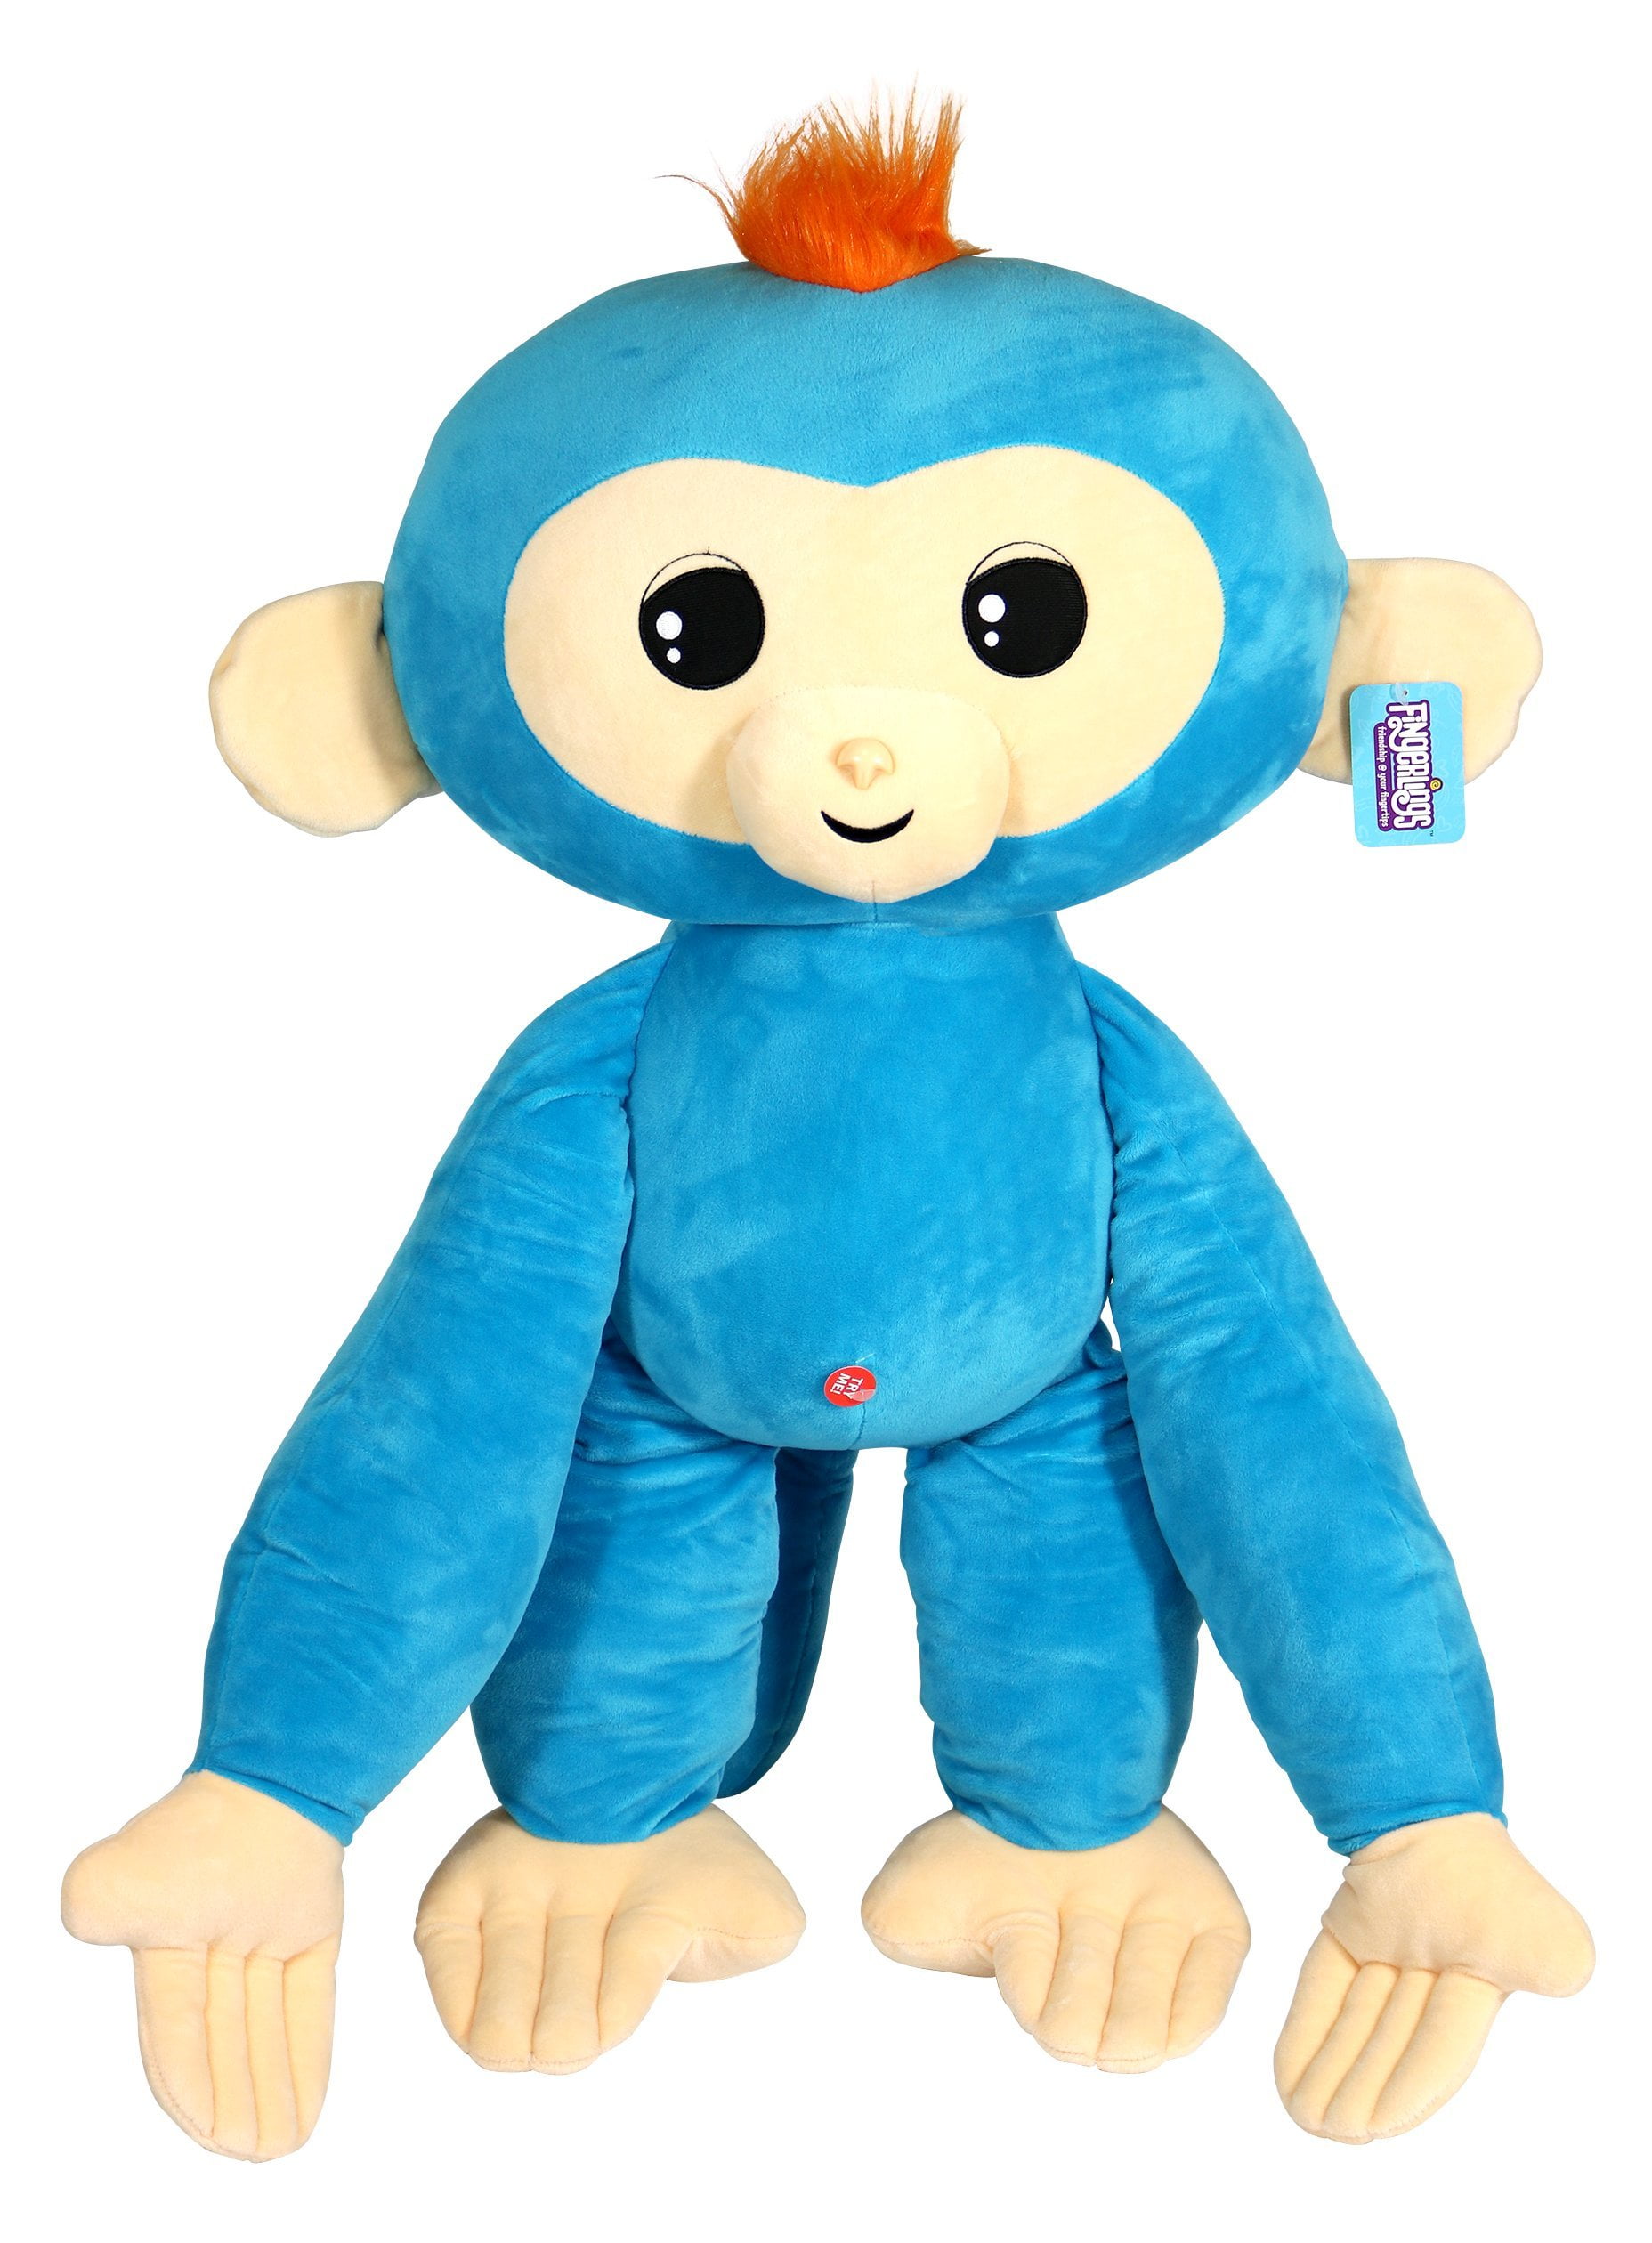 Fingerlings Monkey Bright Blue Plush stuffed 9/" posable toy doll NEW